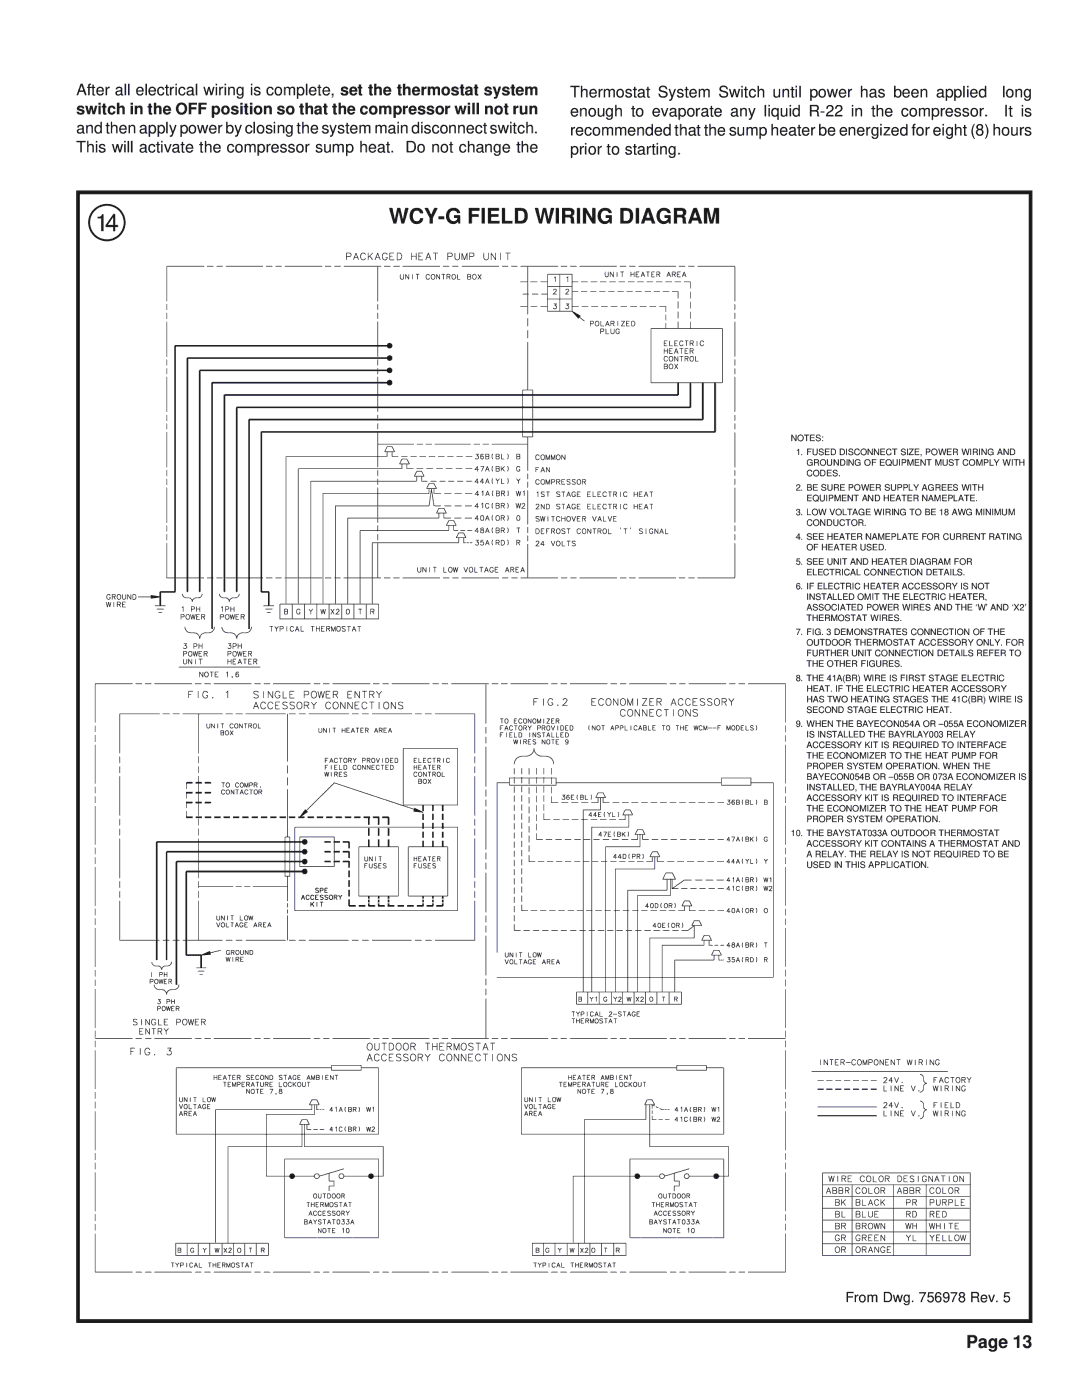 Trane WCY048G1, WCY042G1, WCY036G1, WCY030G1, WCY060G1, WCY024G1 manual WCY-G Field Wiring Diagram 